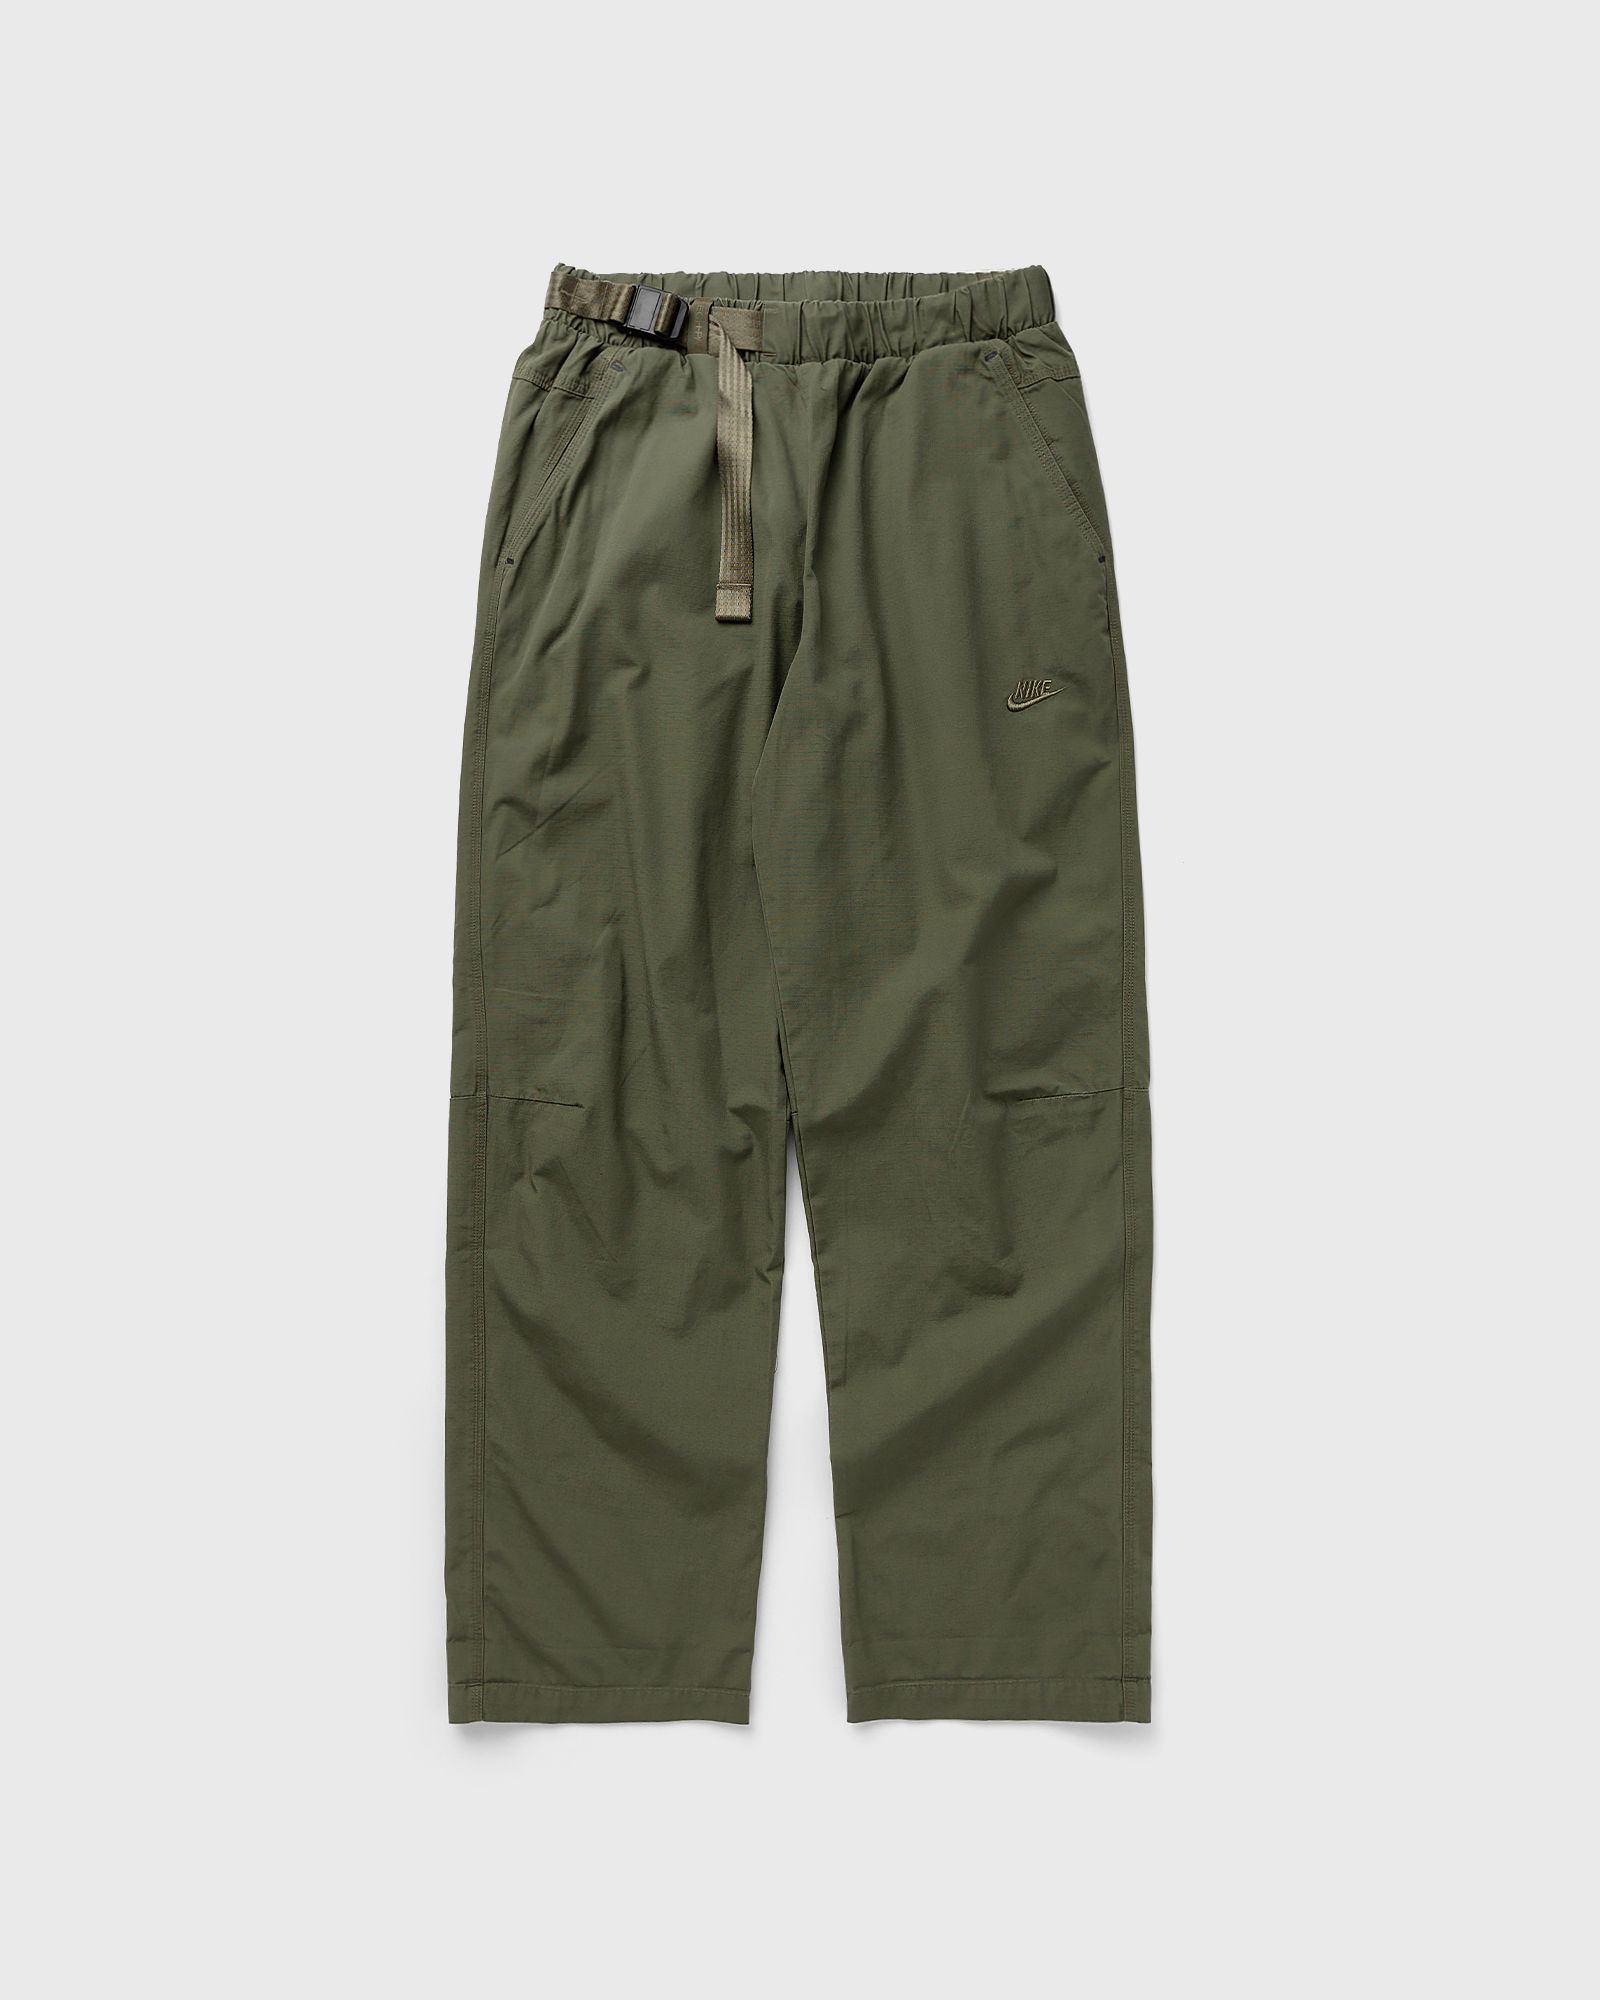 Nike - tech pack upf woven pants men casual pants green in größe:xl